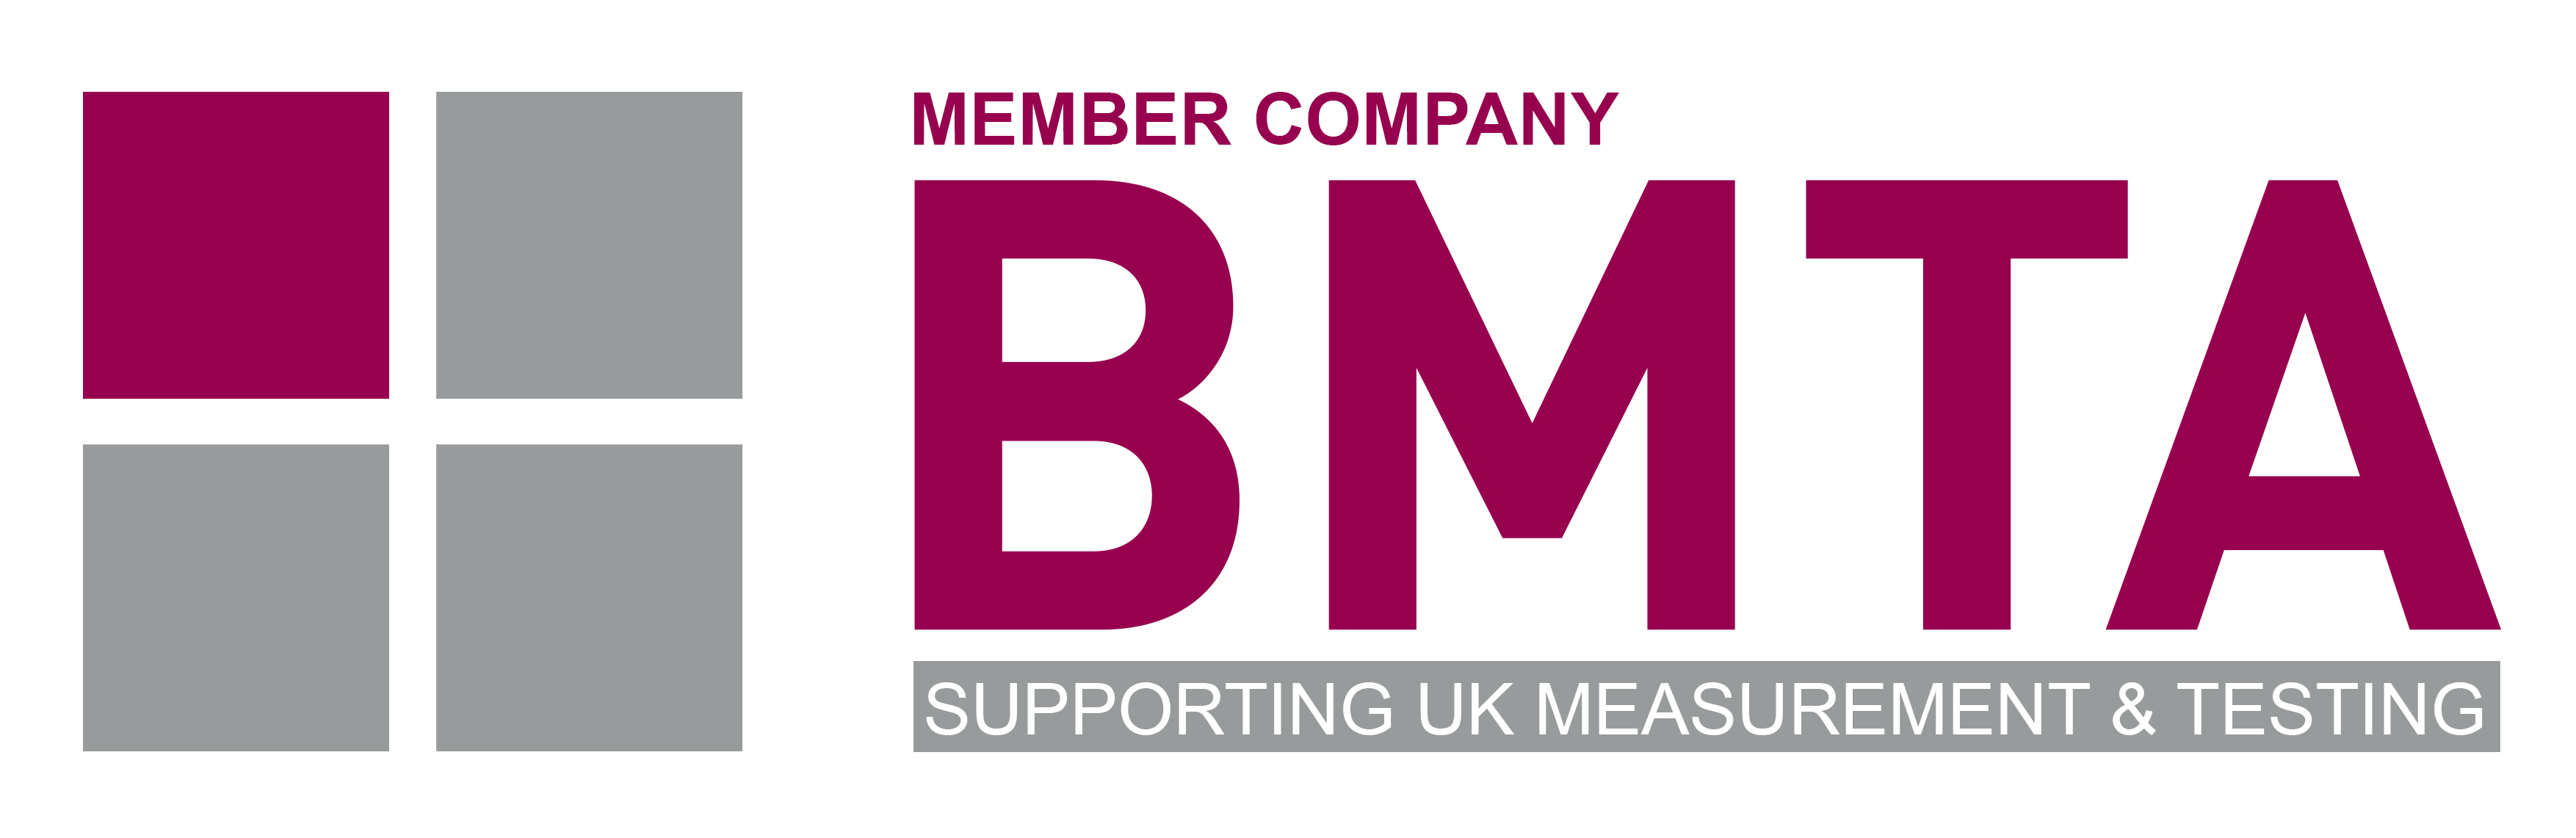 BMTA Member Company Logo